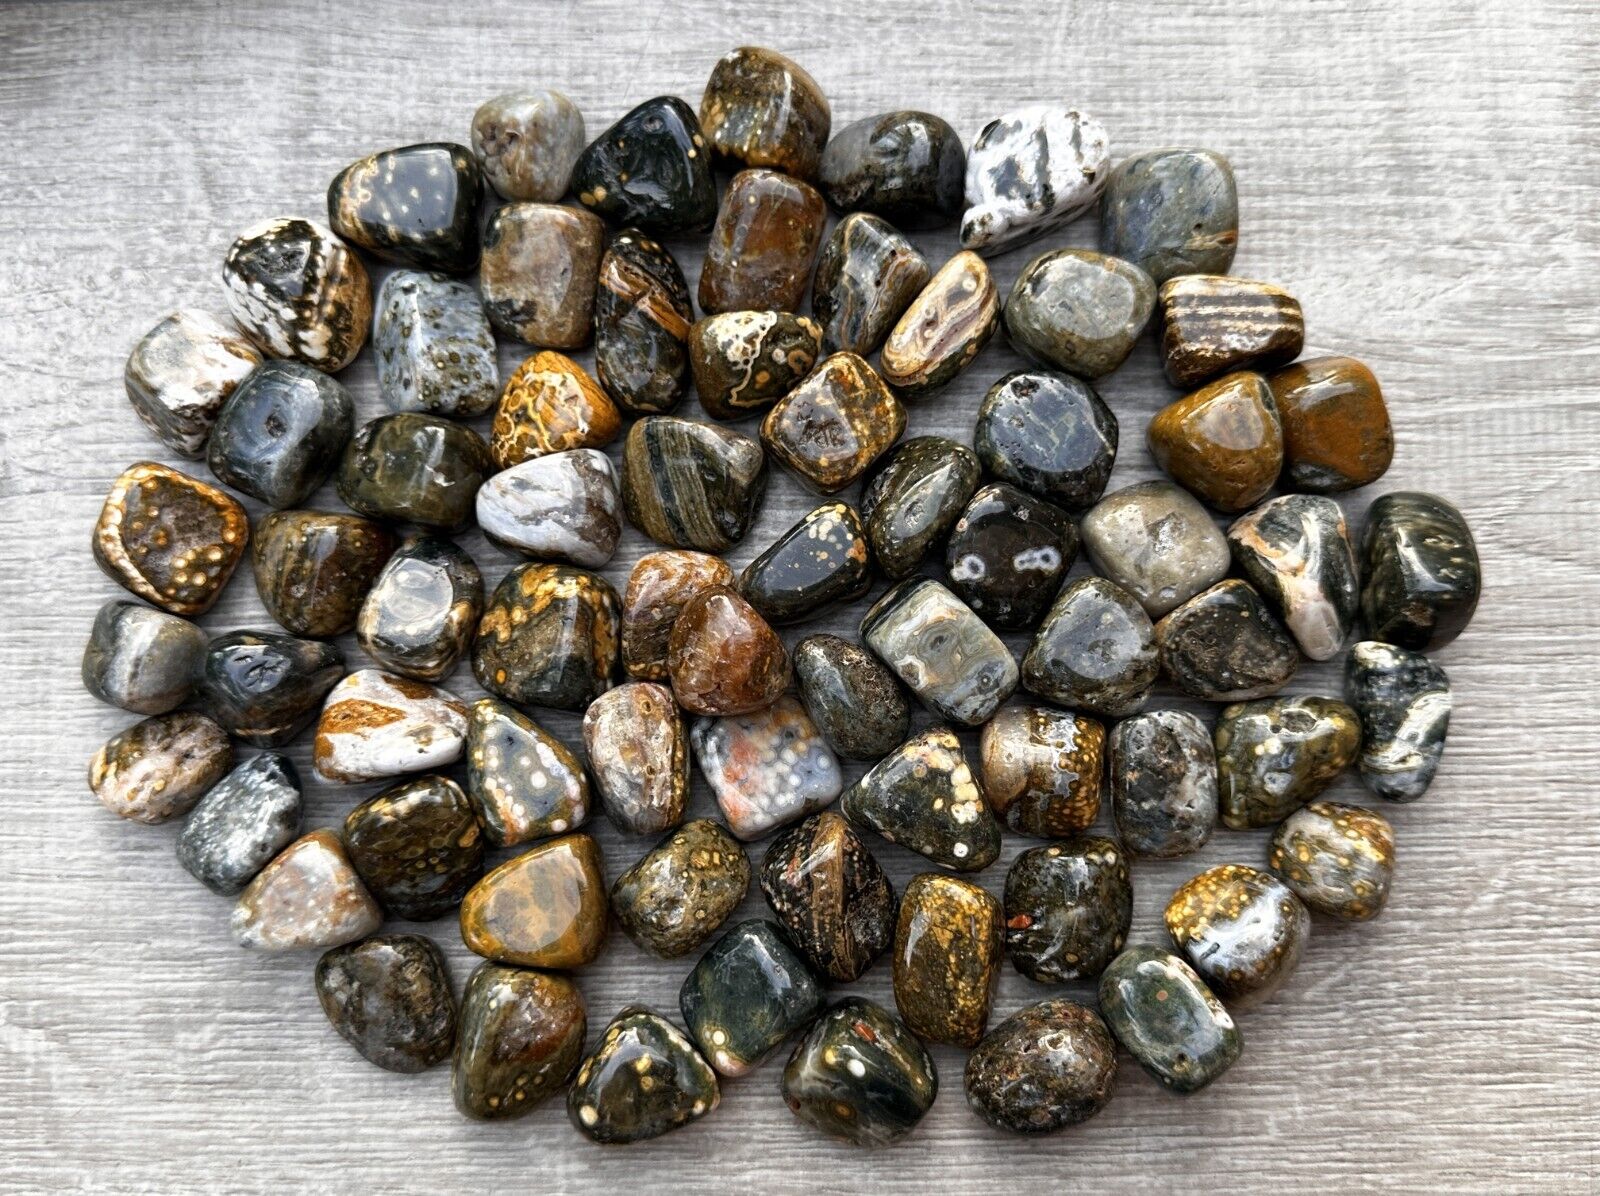 Grade A++ Ocean Jasper Tumbled Stones, 0.75-1 inch Sea Jasper Stones, Bulk Lot